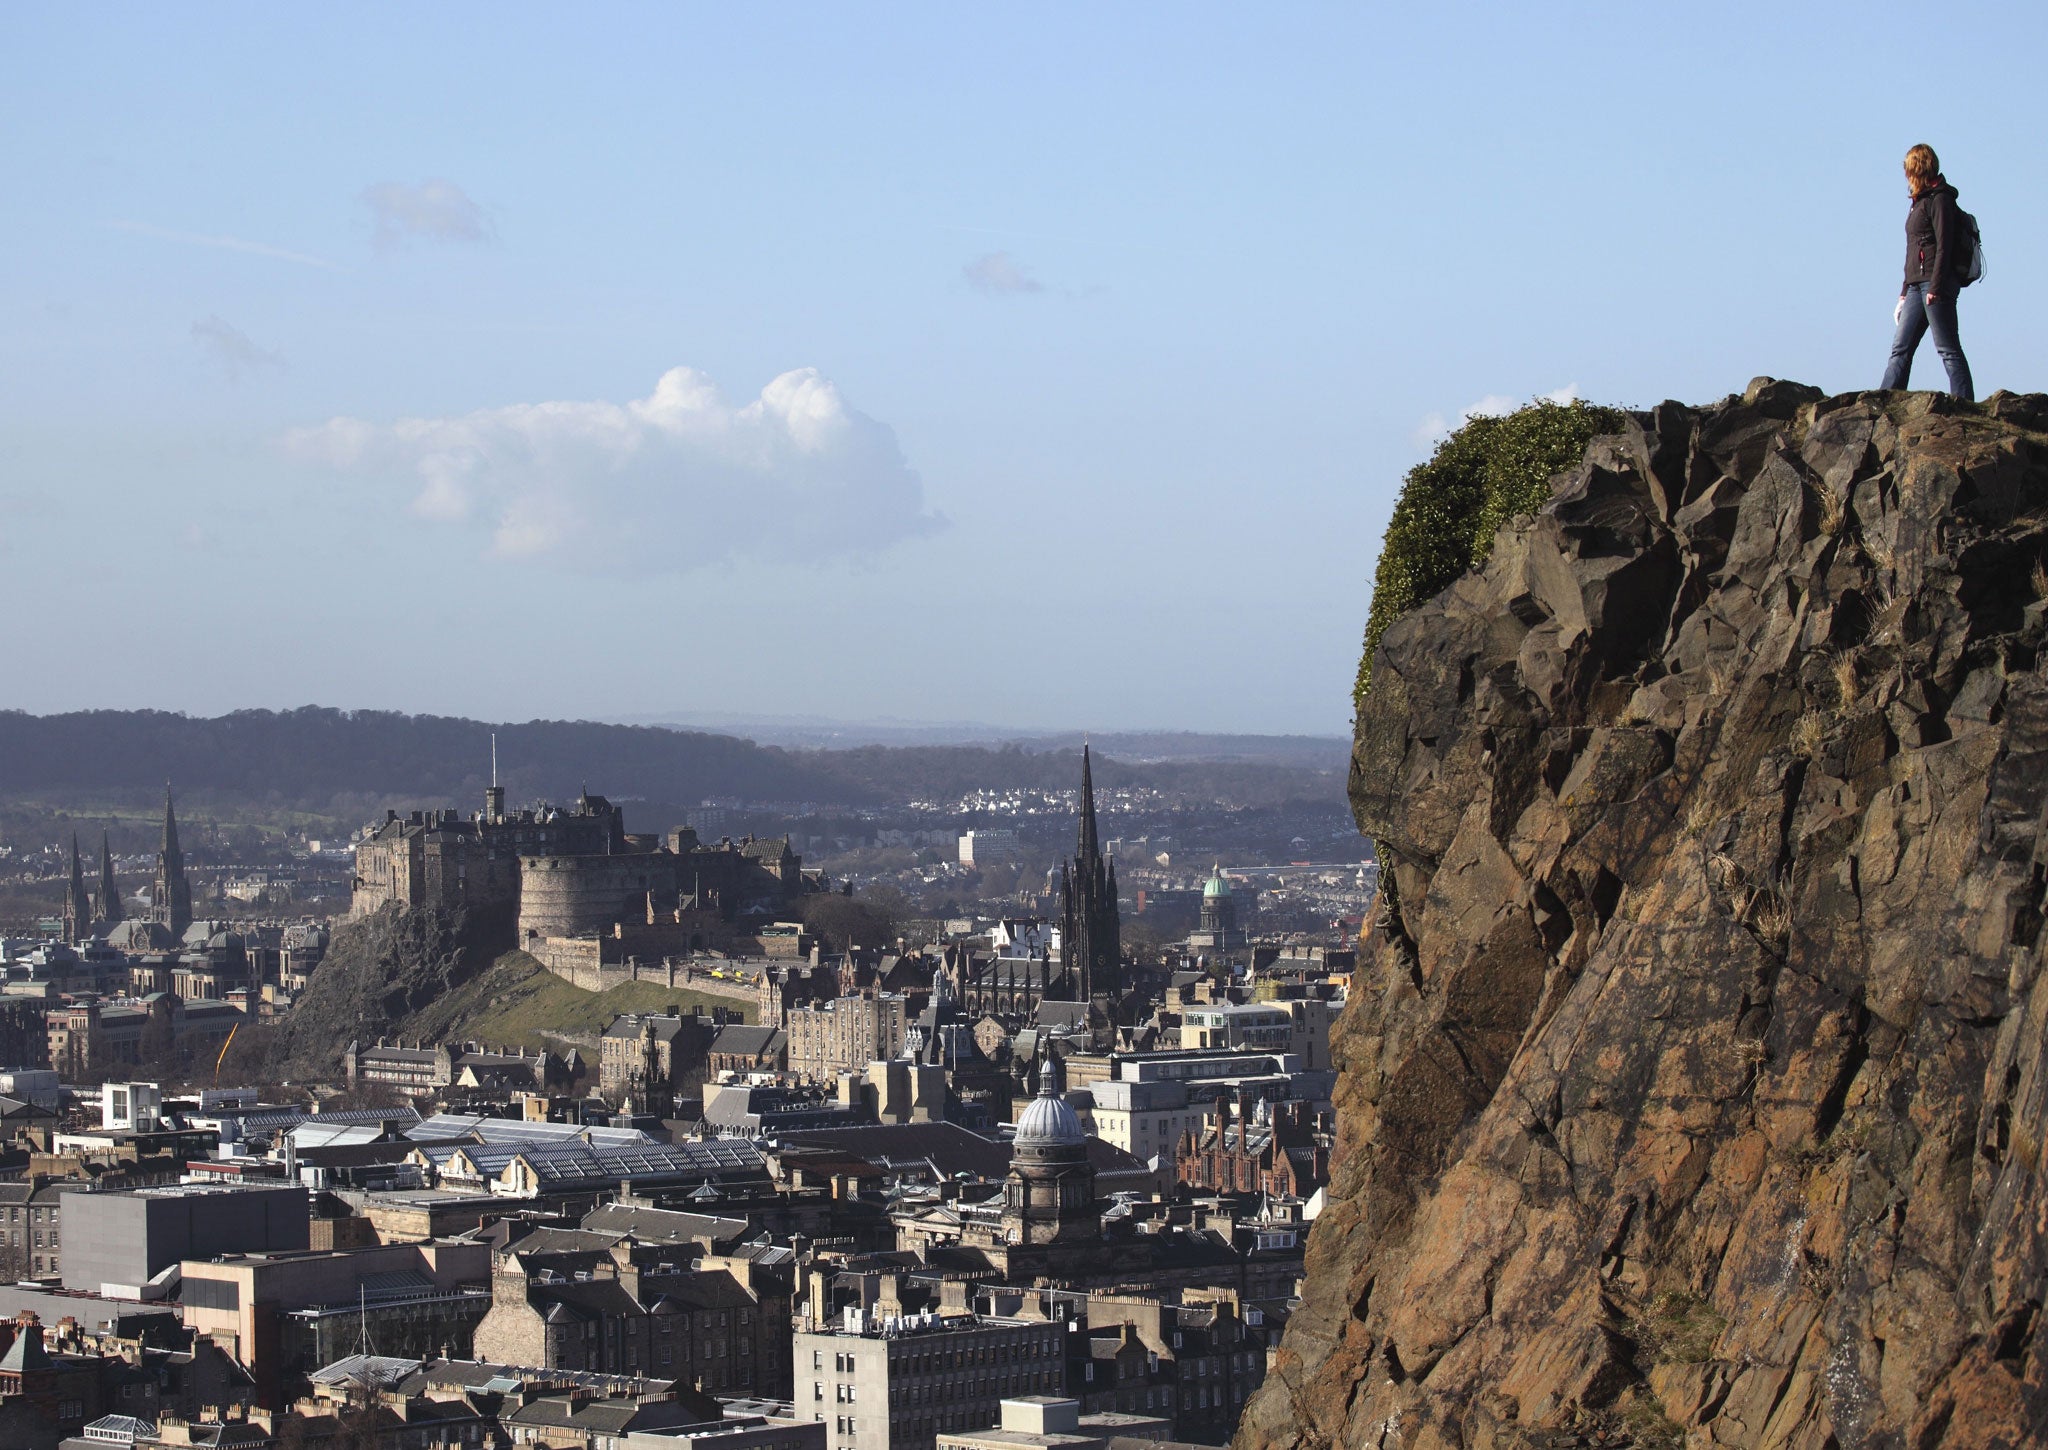 The view from Arthur's Seat, Edinburgh